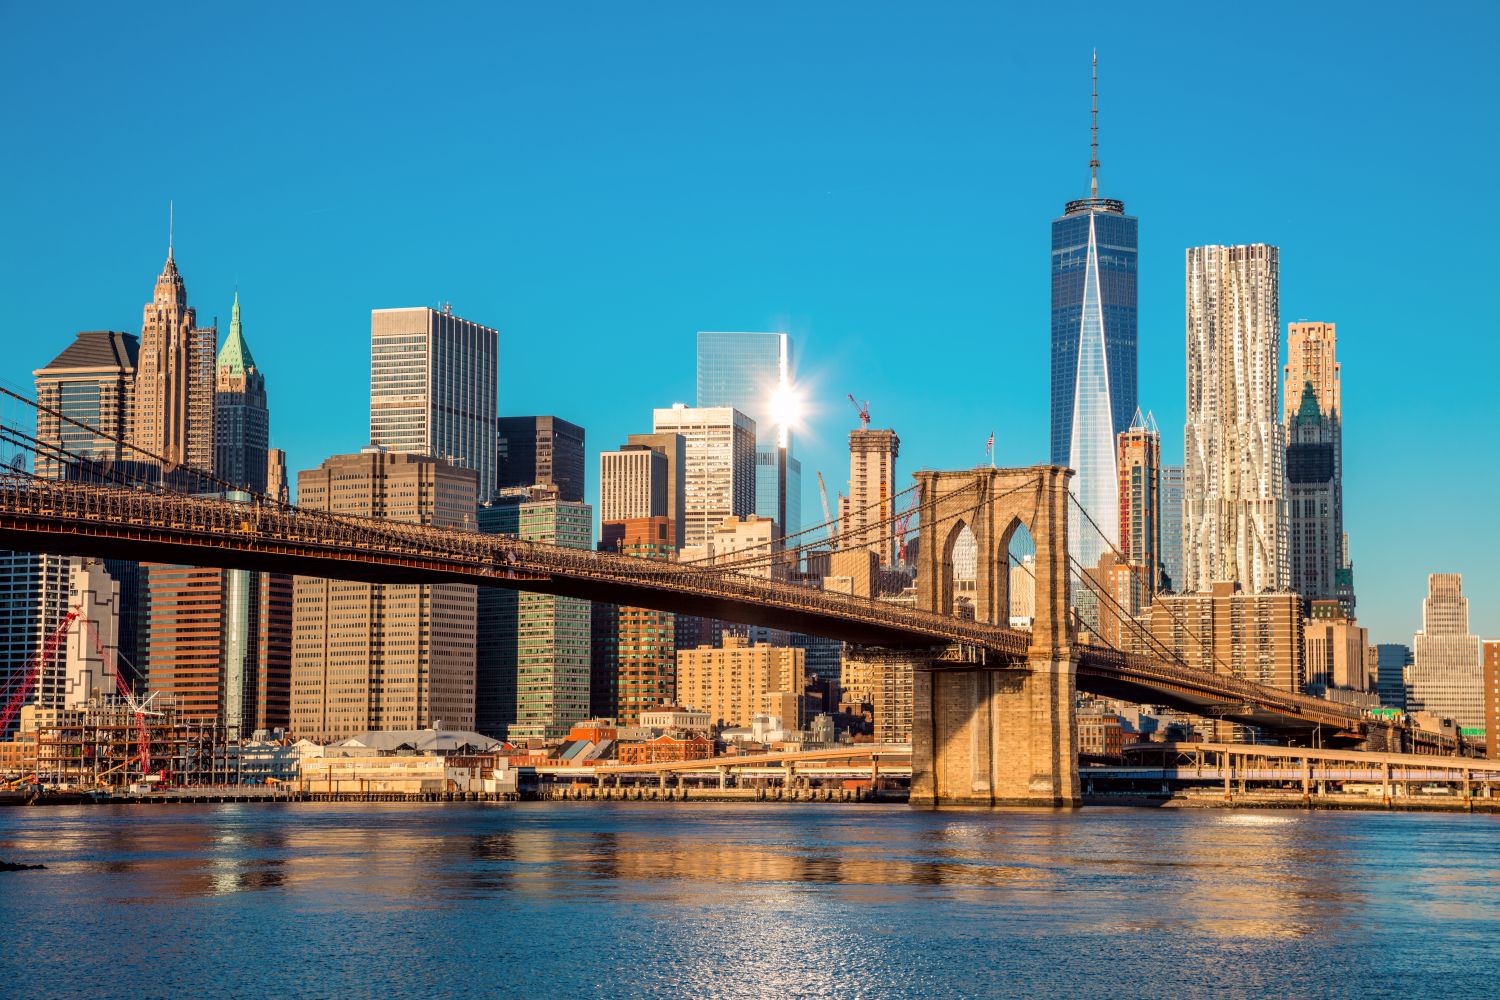 New york. Бруклинский мост Нью-Йорк. Бруклинский мост Манхэттен. Бруклинский мост Нью-Йорк фреска. Нью-Йорк Сити Манхэттен мост.